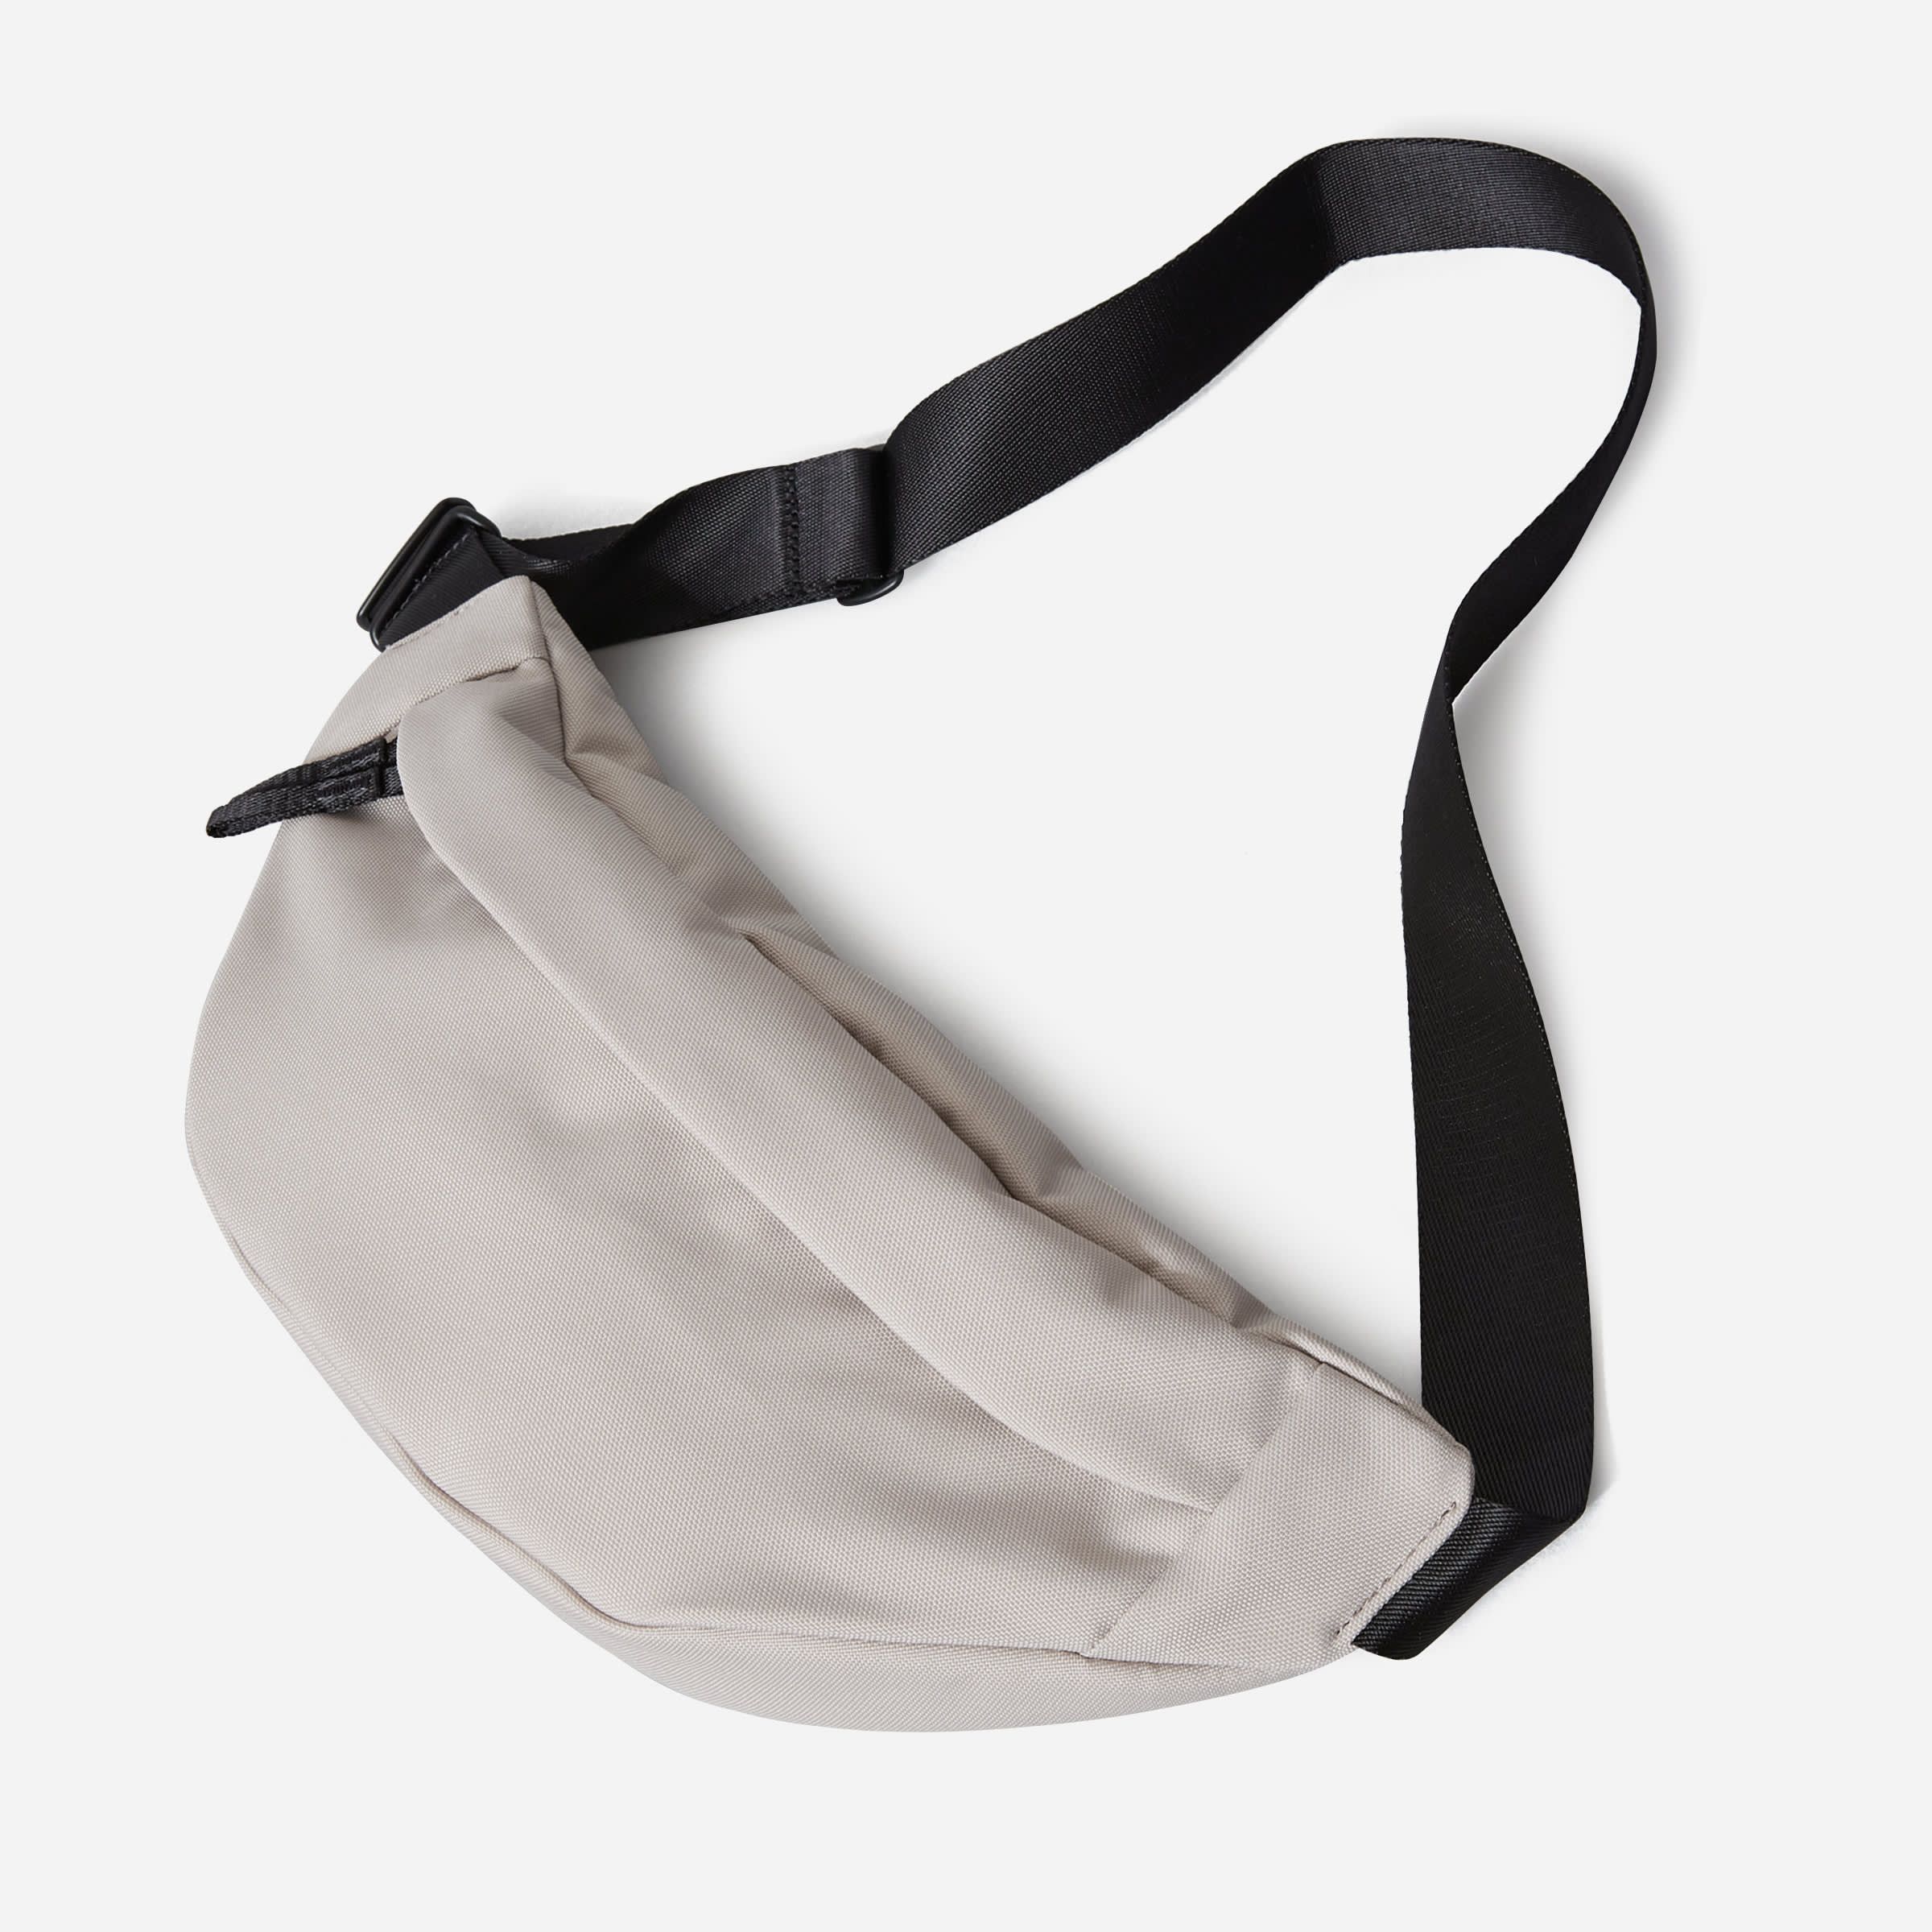 Play aka Bum Bag Shoulder Sling Pouch Sport Quick Release Buckle 3 Zippered Pockets for Travel Adjustable Belt Kinda Full Equality Fanny Waist Pack 